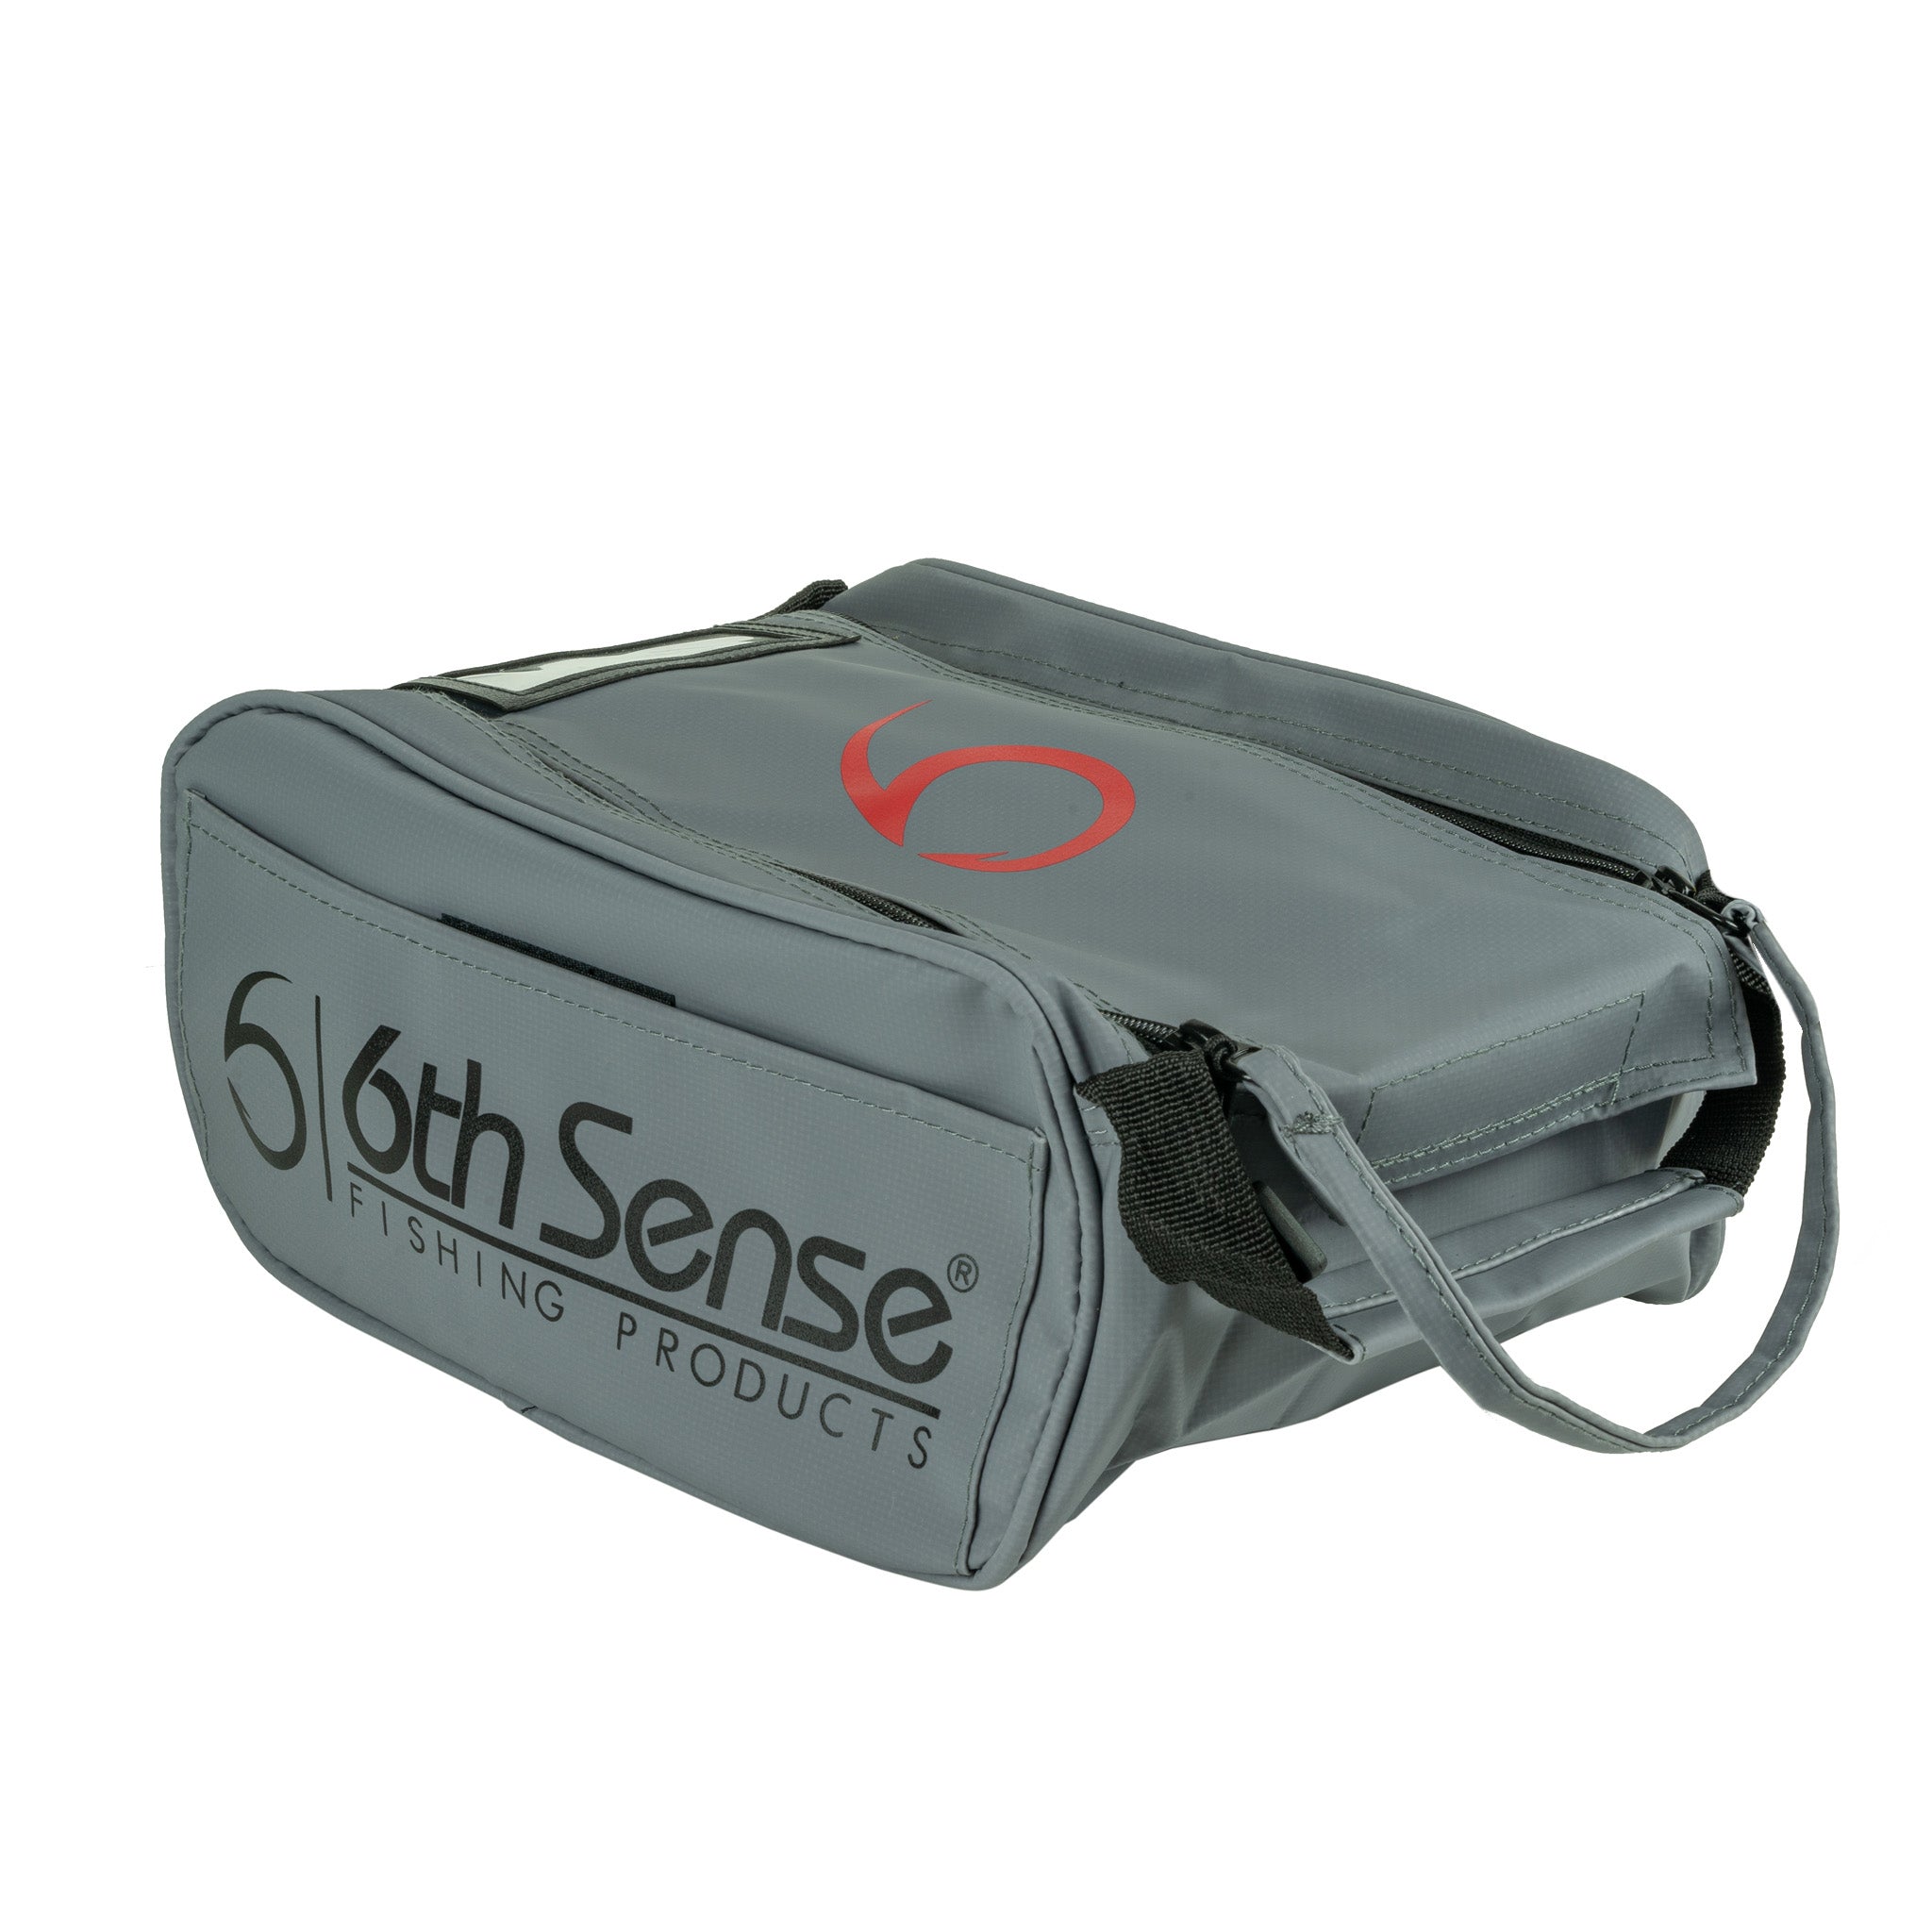 Gear - Bait Bag - Large - 6th Sense Fishing